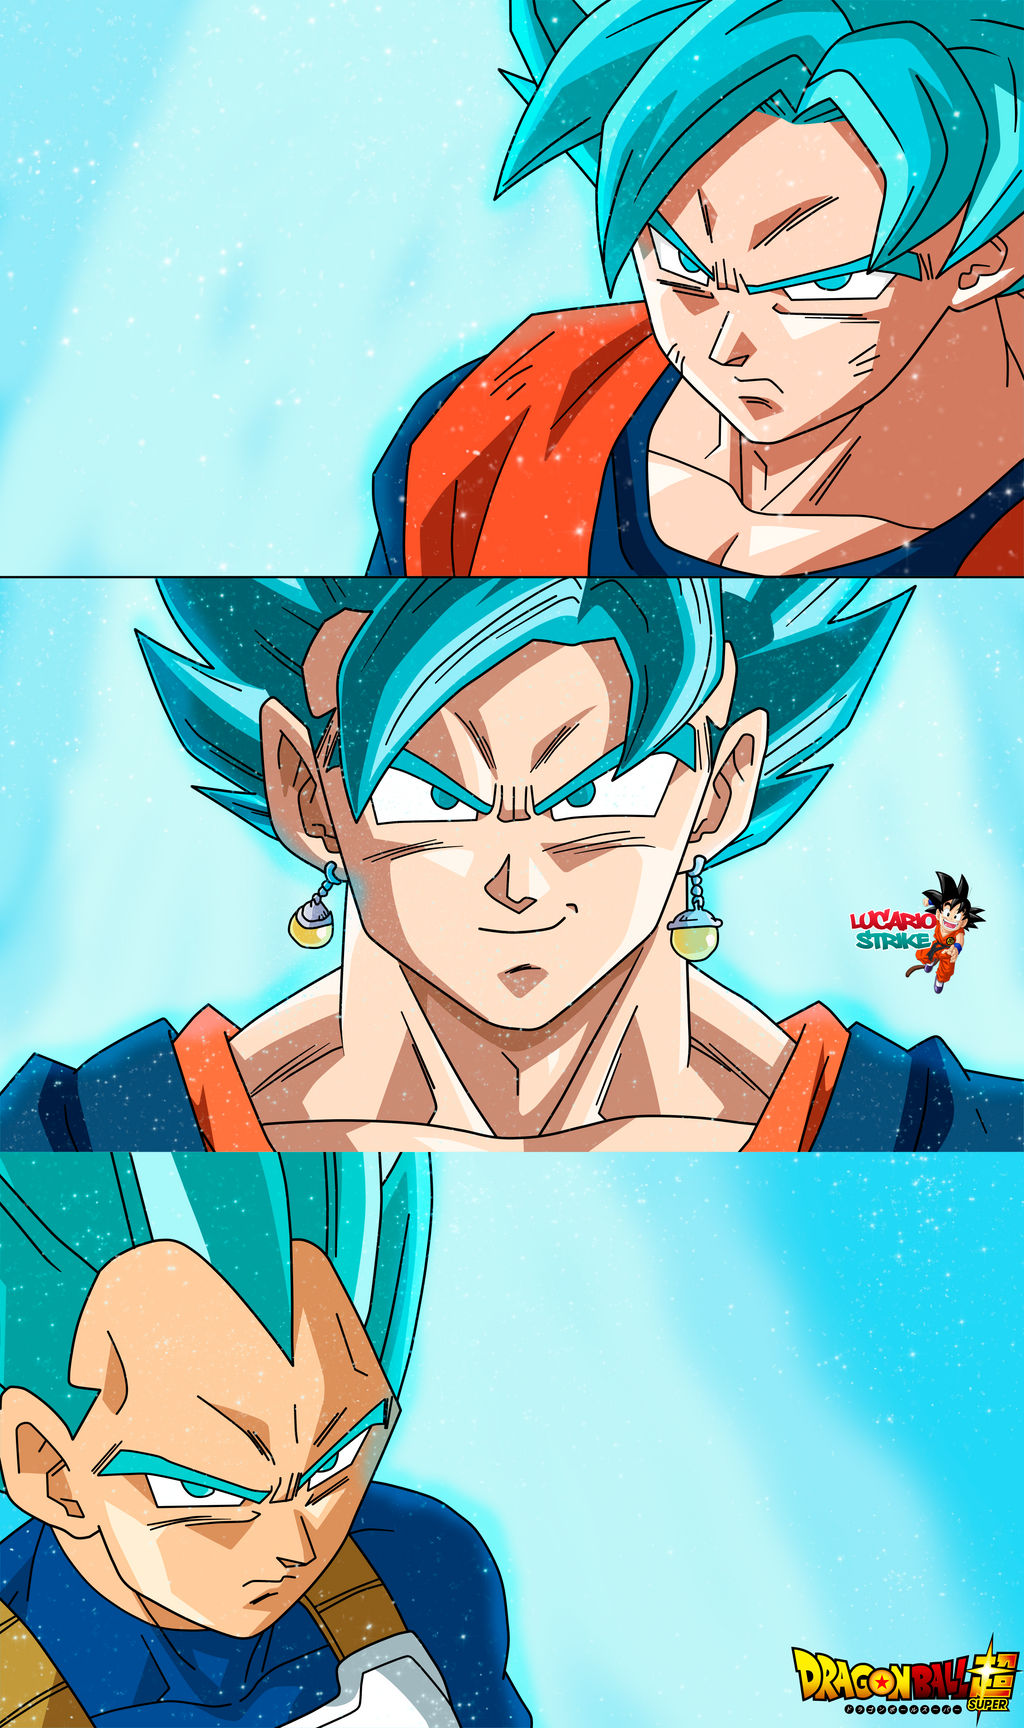 Goku Super Sayajin Blue by lucario-strike on DeviantArt